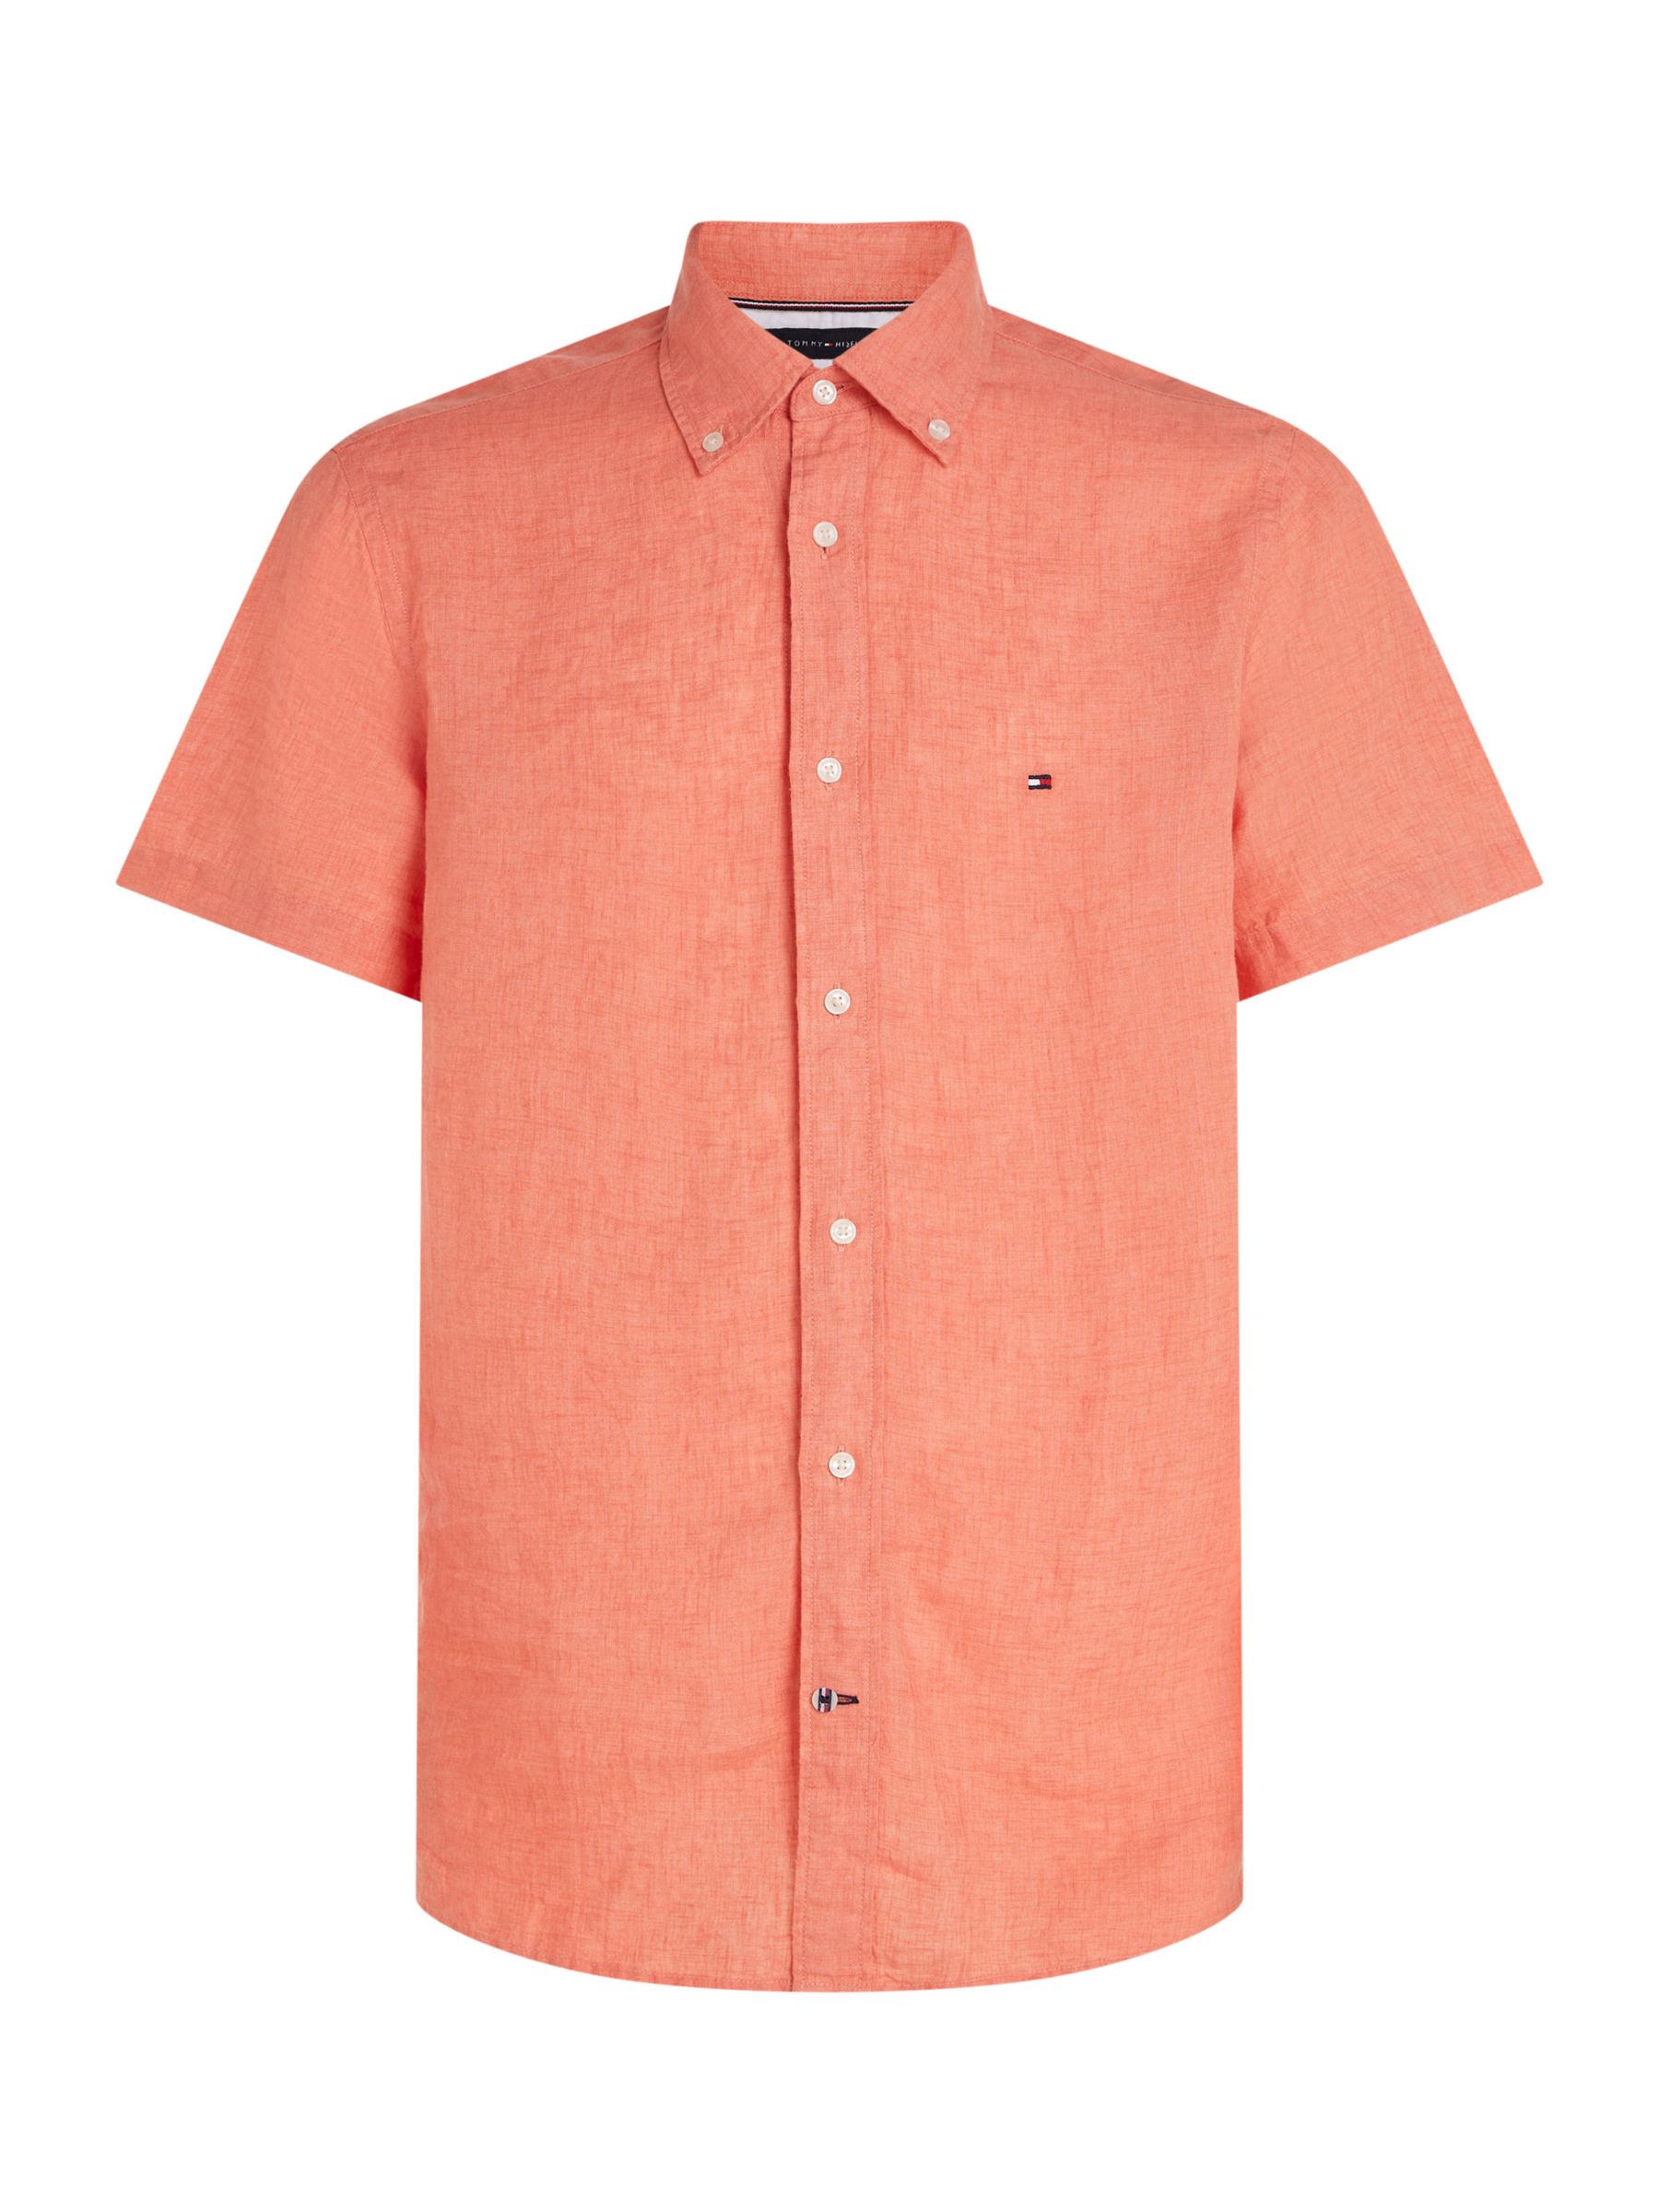 Tommy Hilfiger Shirt - peach dusk/optic white/apricot 